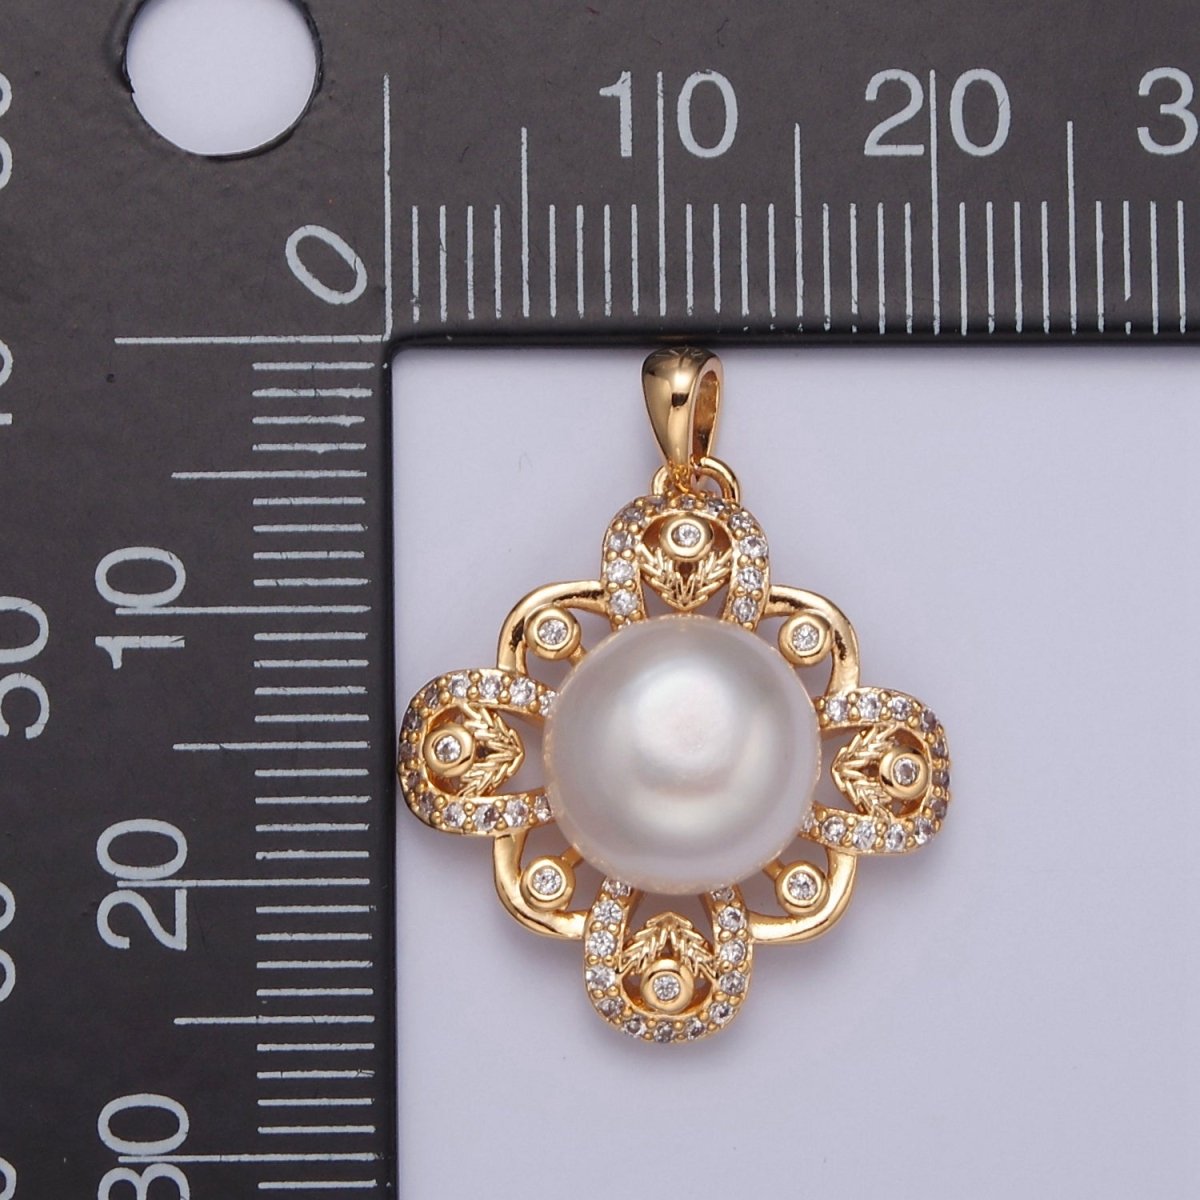 Vintage Round Pave Genuine Shell Pearl Pendant Minimalist Bridal Wedding Jewelry I-030 - DLUXCA